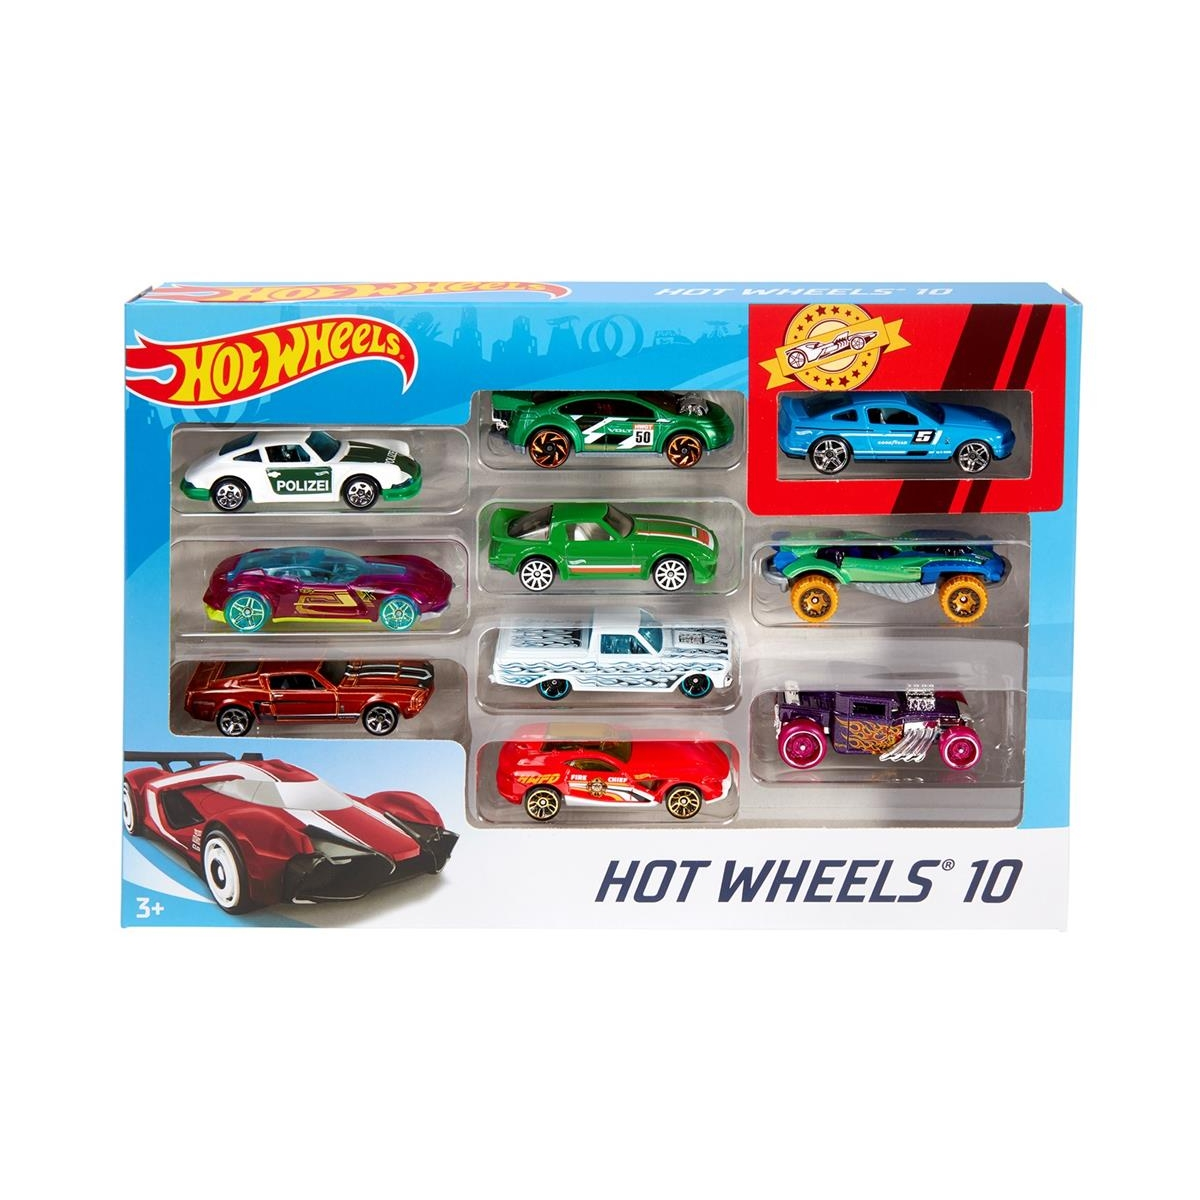 HOT WHEELS 412496 vehicle toy